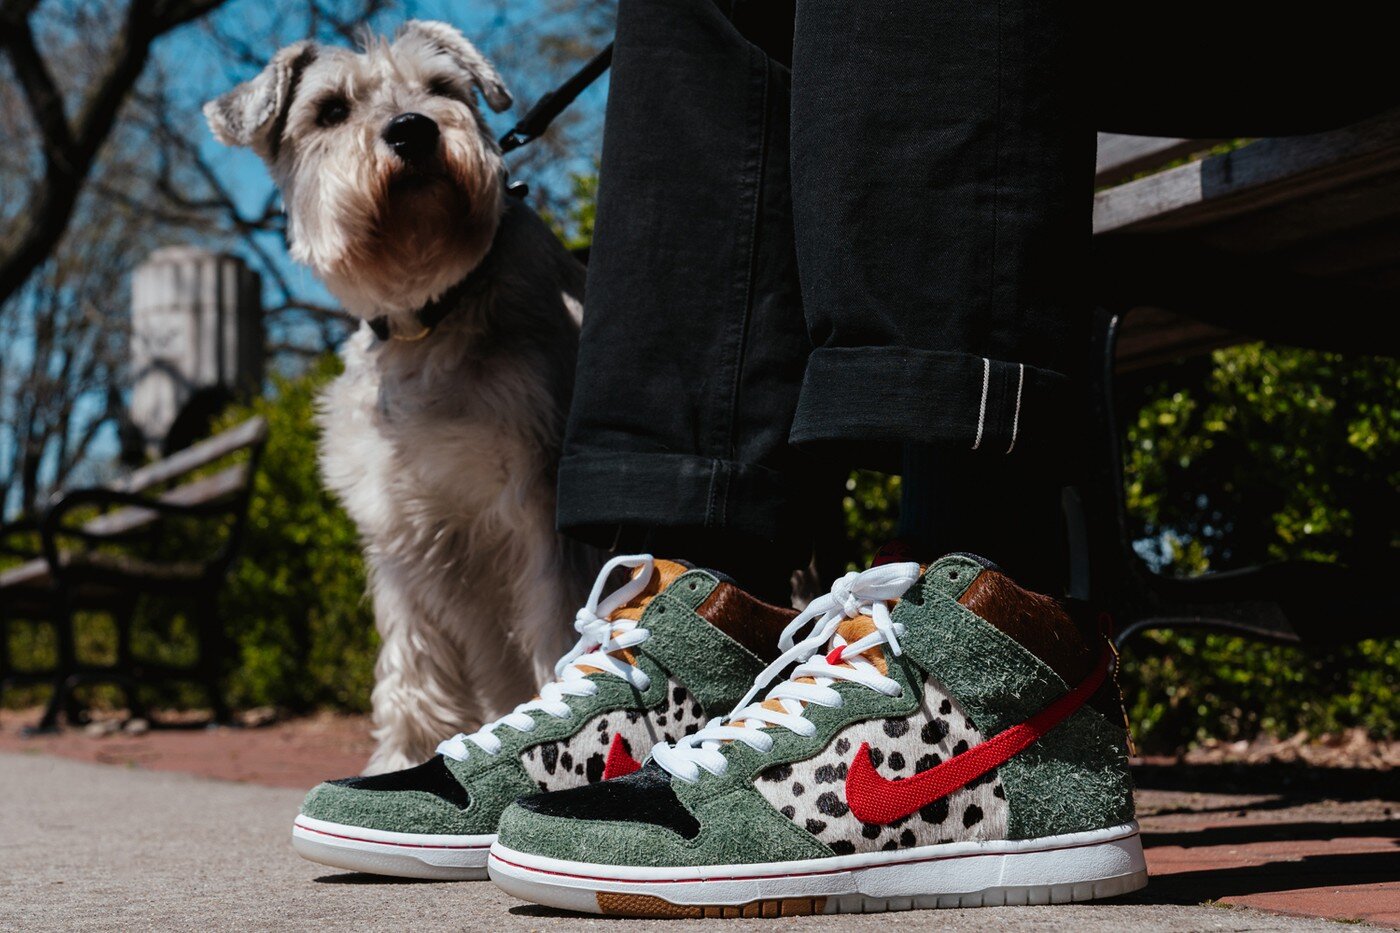 Nike SB Dunk High "Walk the Dog" Photo Editorial